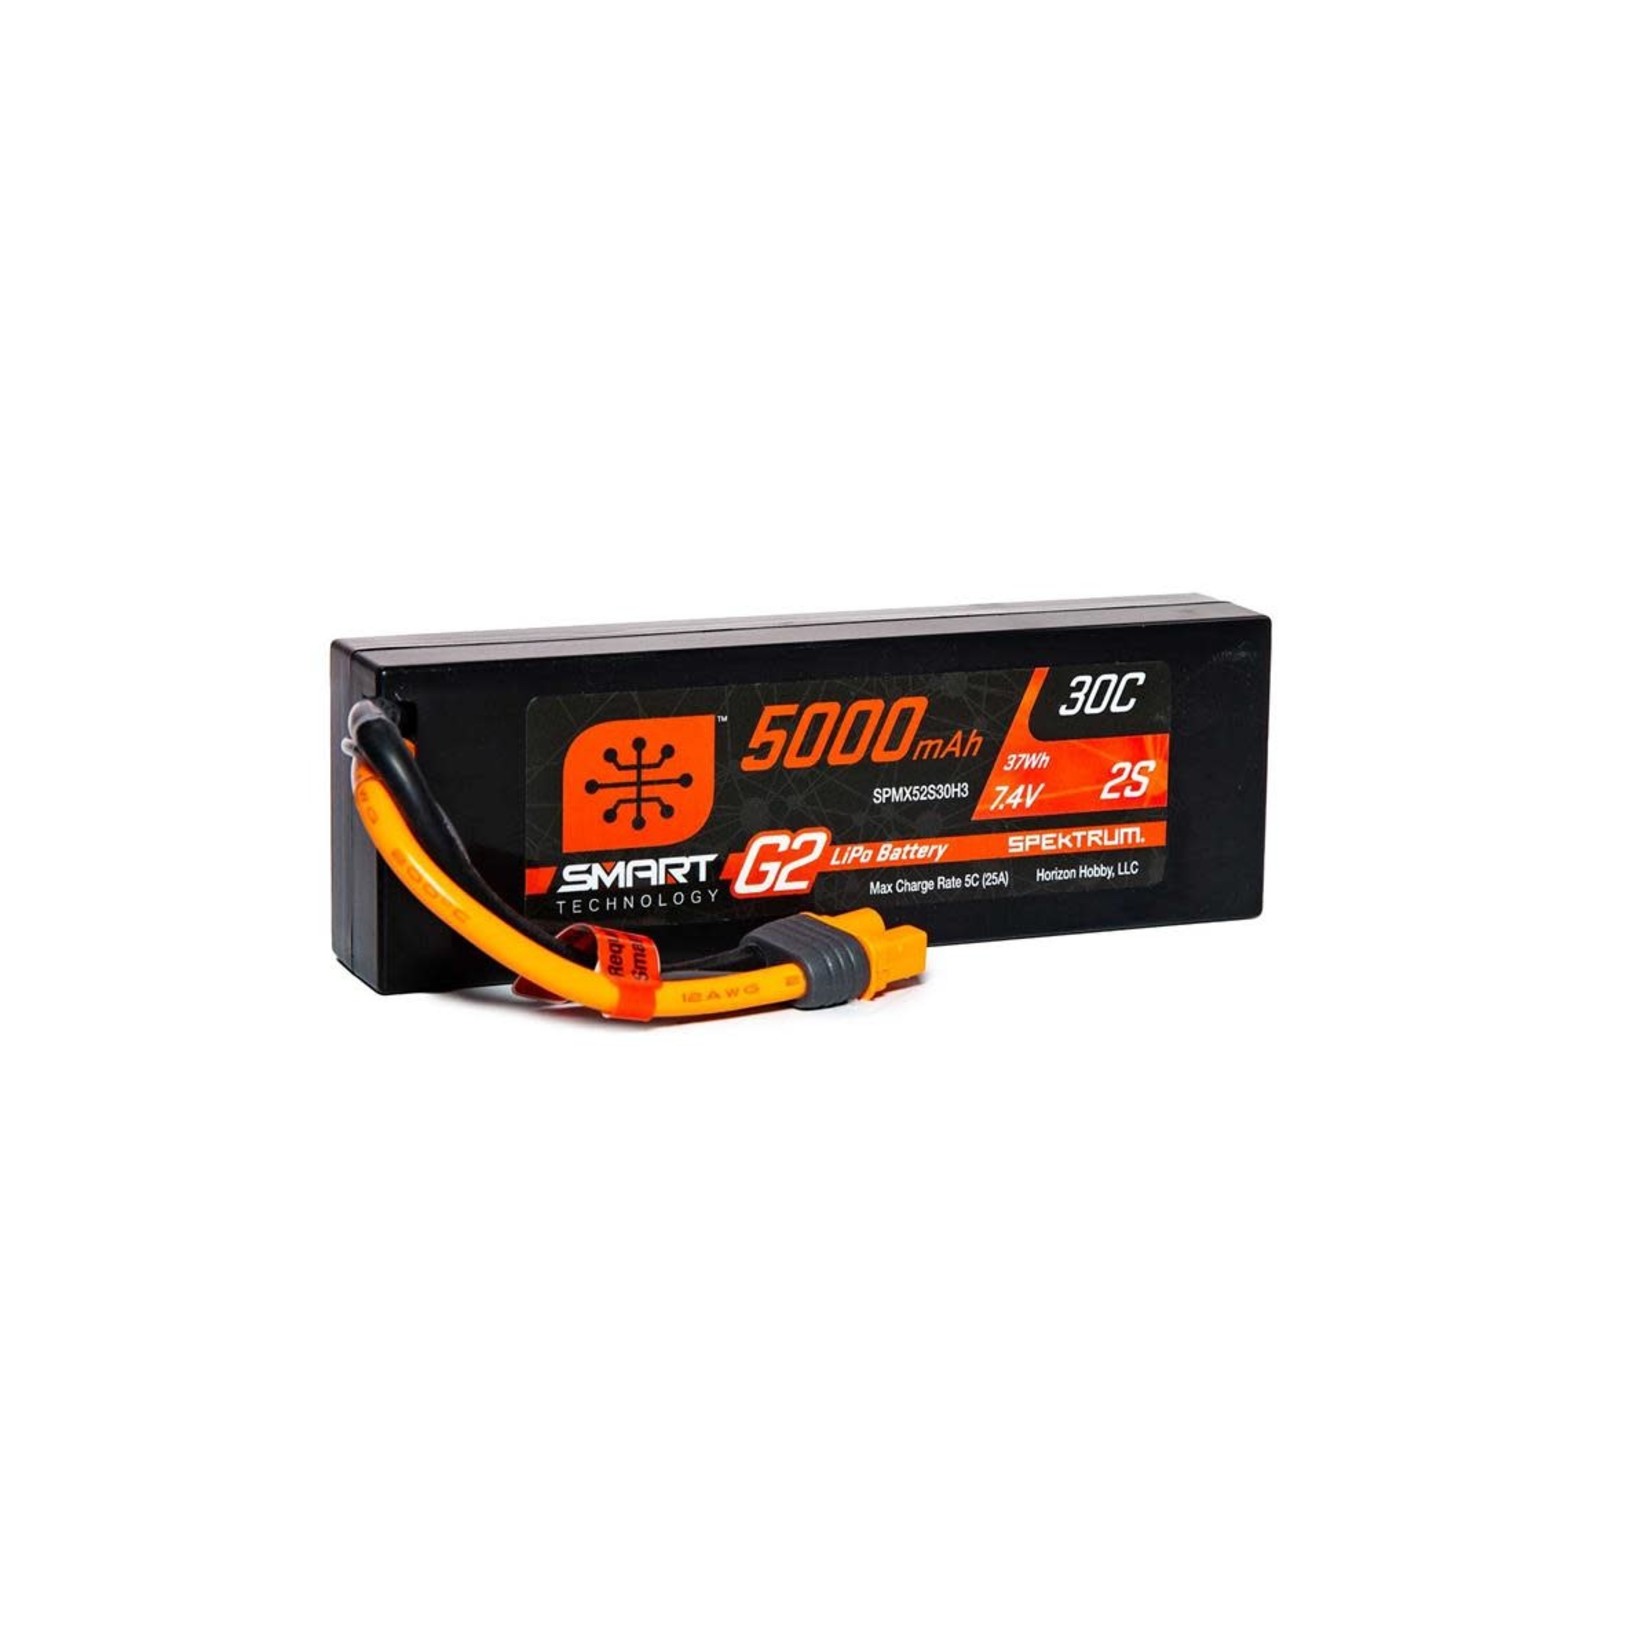 Spektrum Spektrum RC 2S Smart LiPo 30C Hard Case Battery Pack (7.4V/5000mAh) w/IC3 Connector #SPMX52S30H3